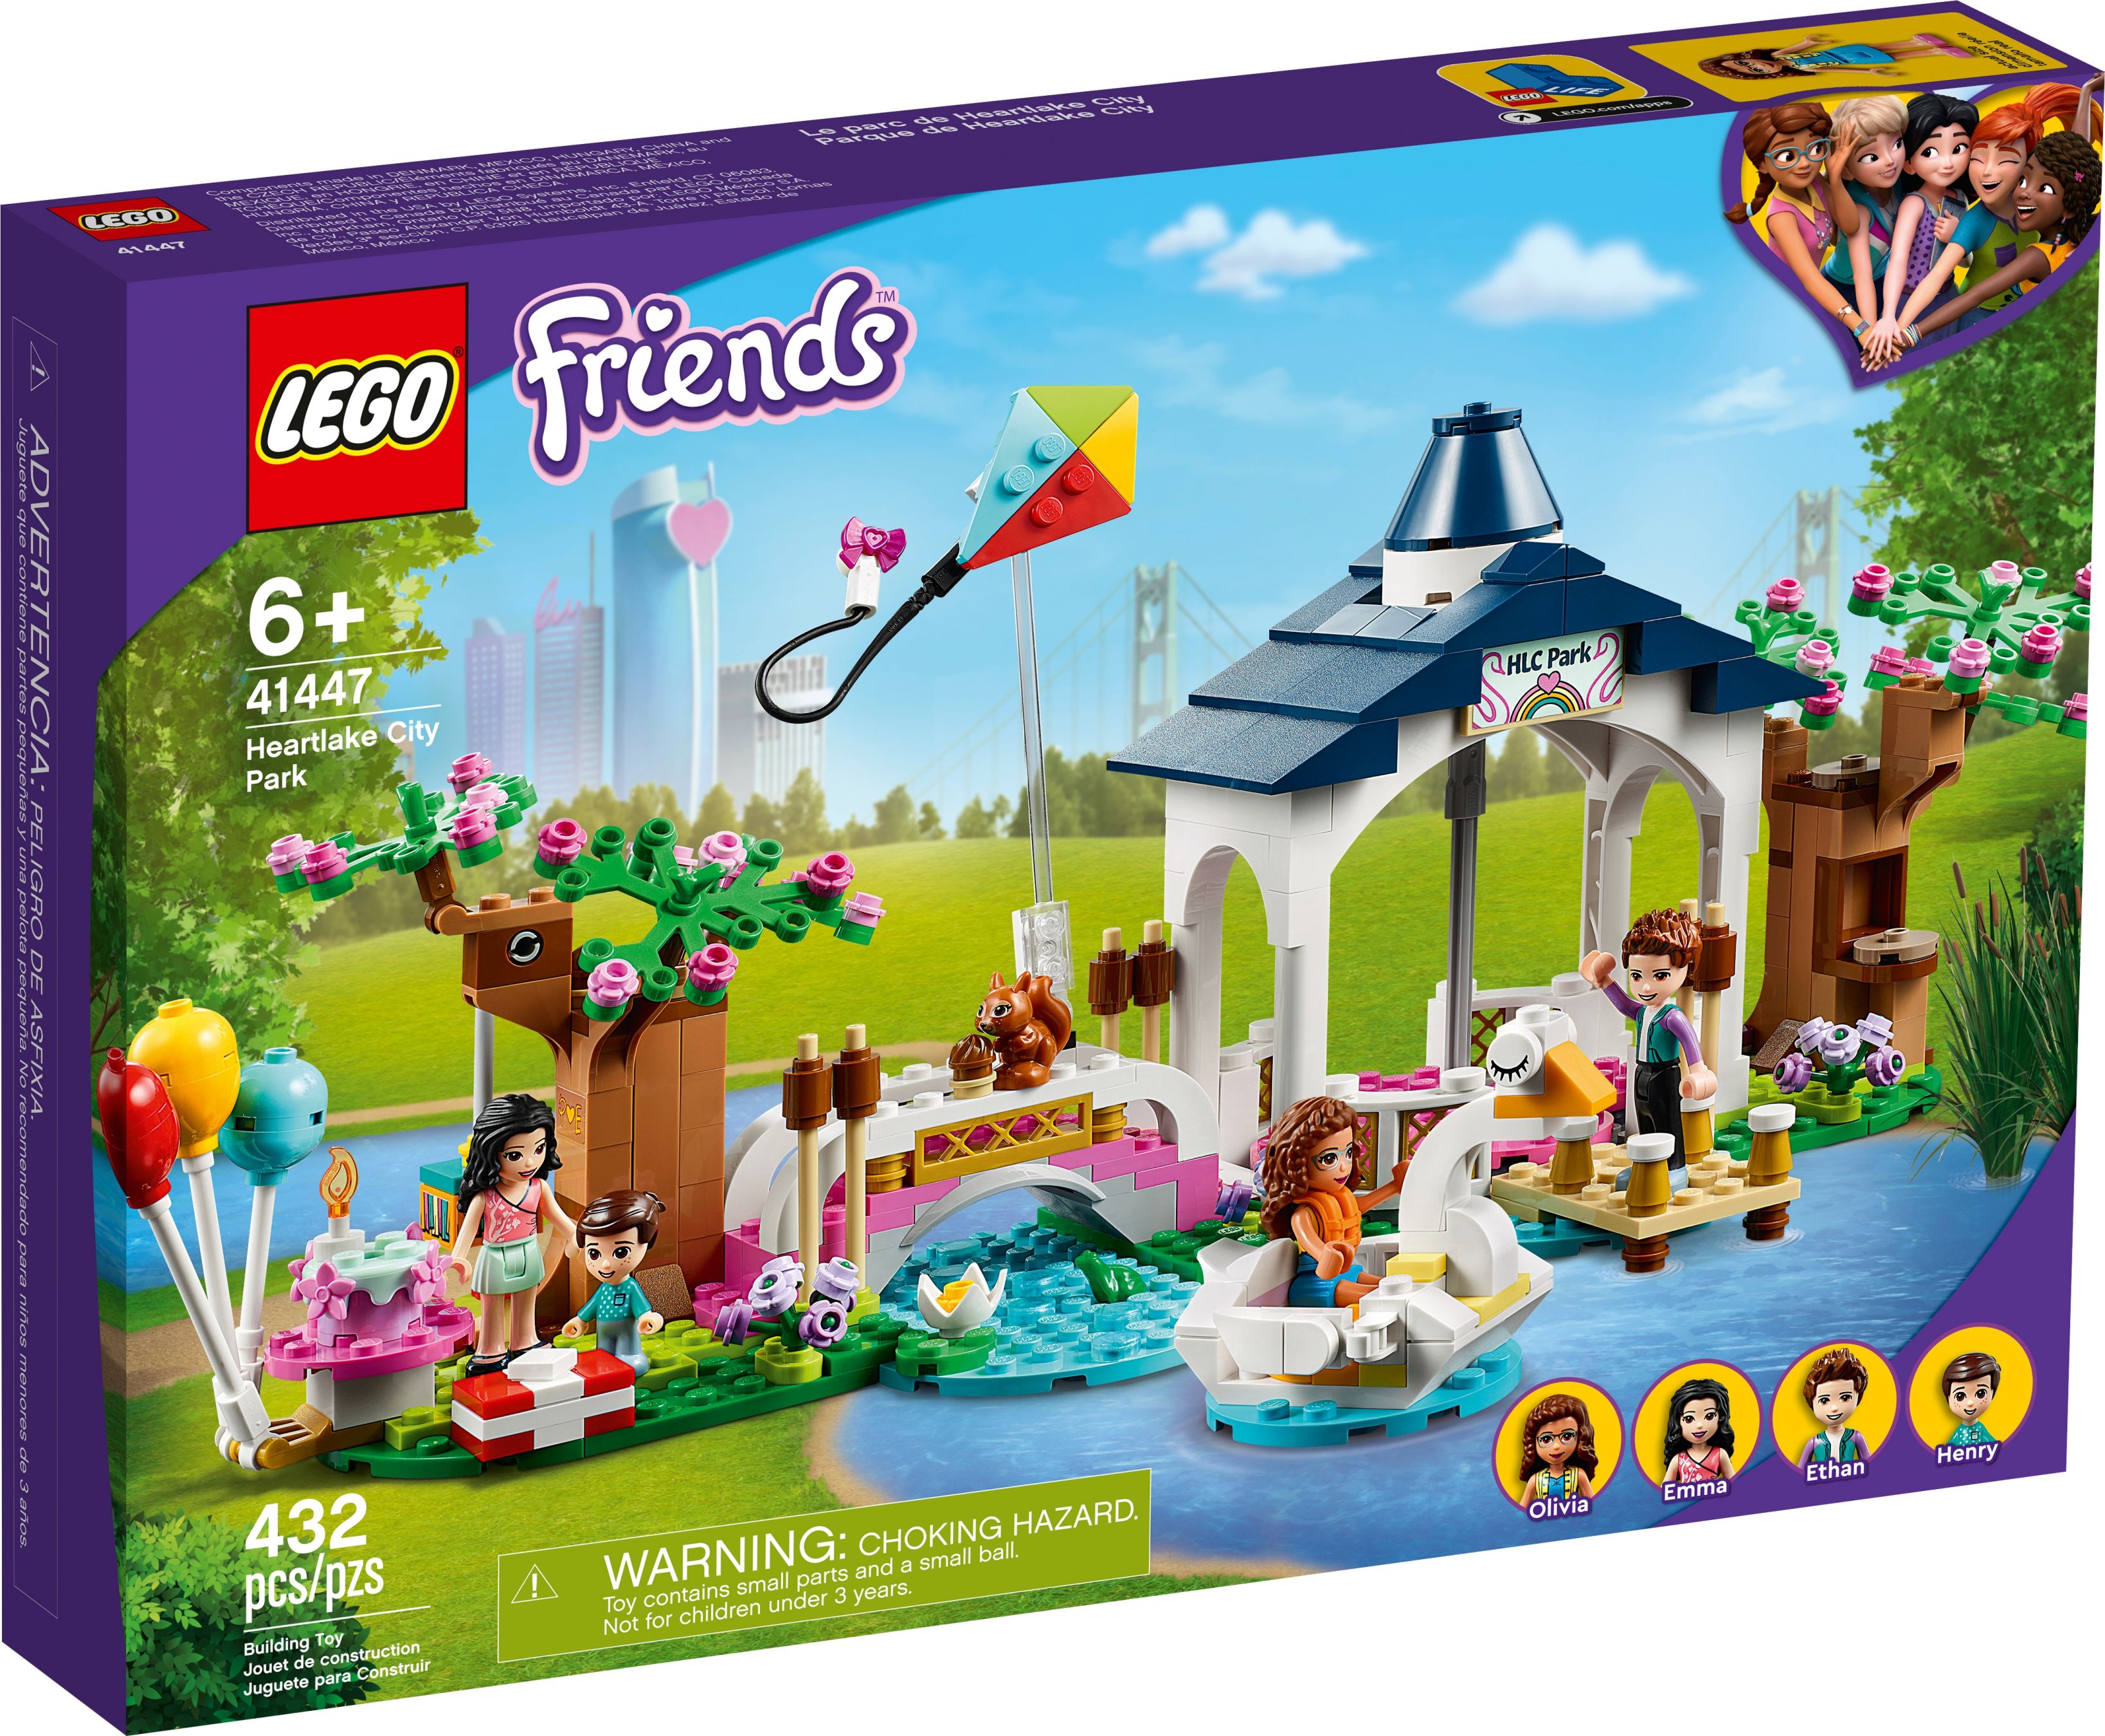 LEGO Friends 41447 Heartlake City Park LEGO_41447_box1_v39.jpg